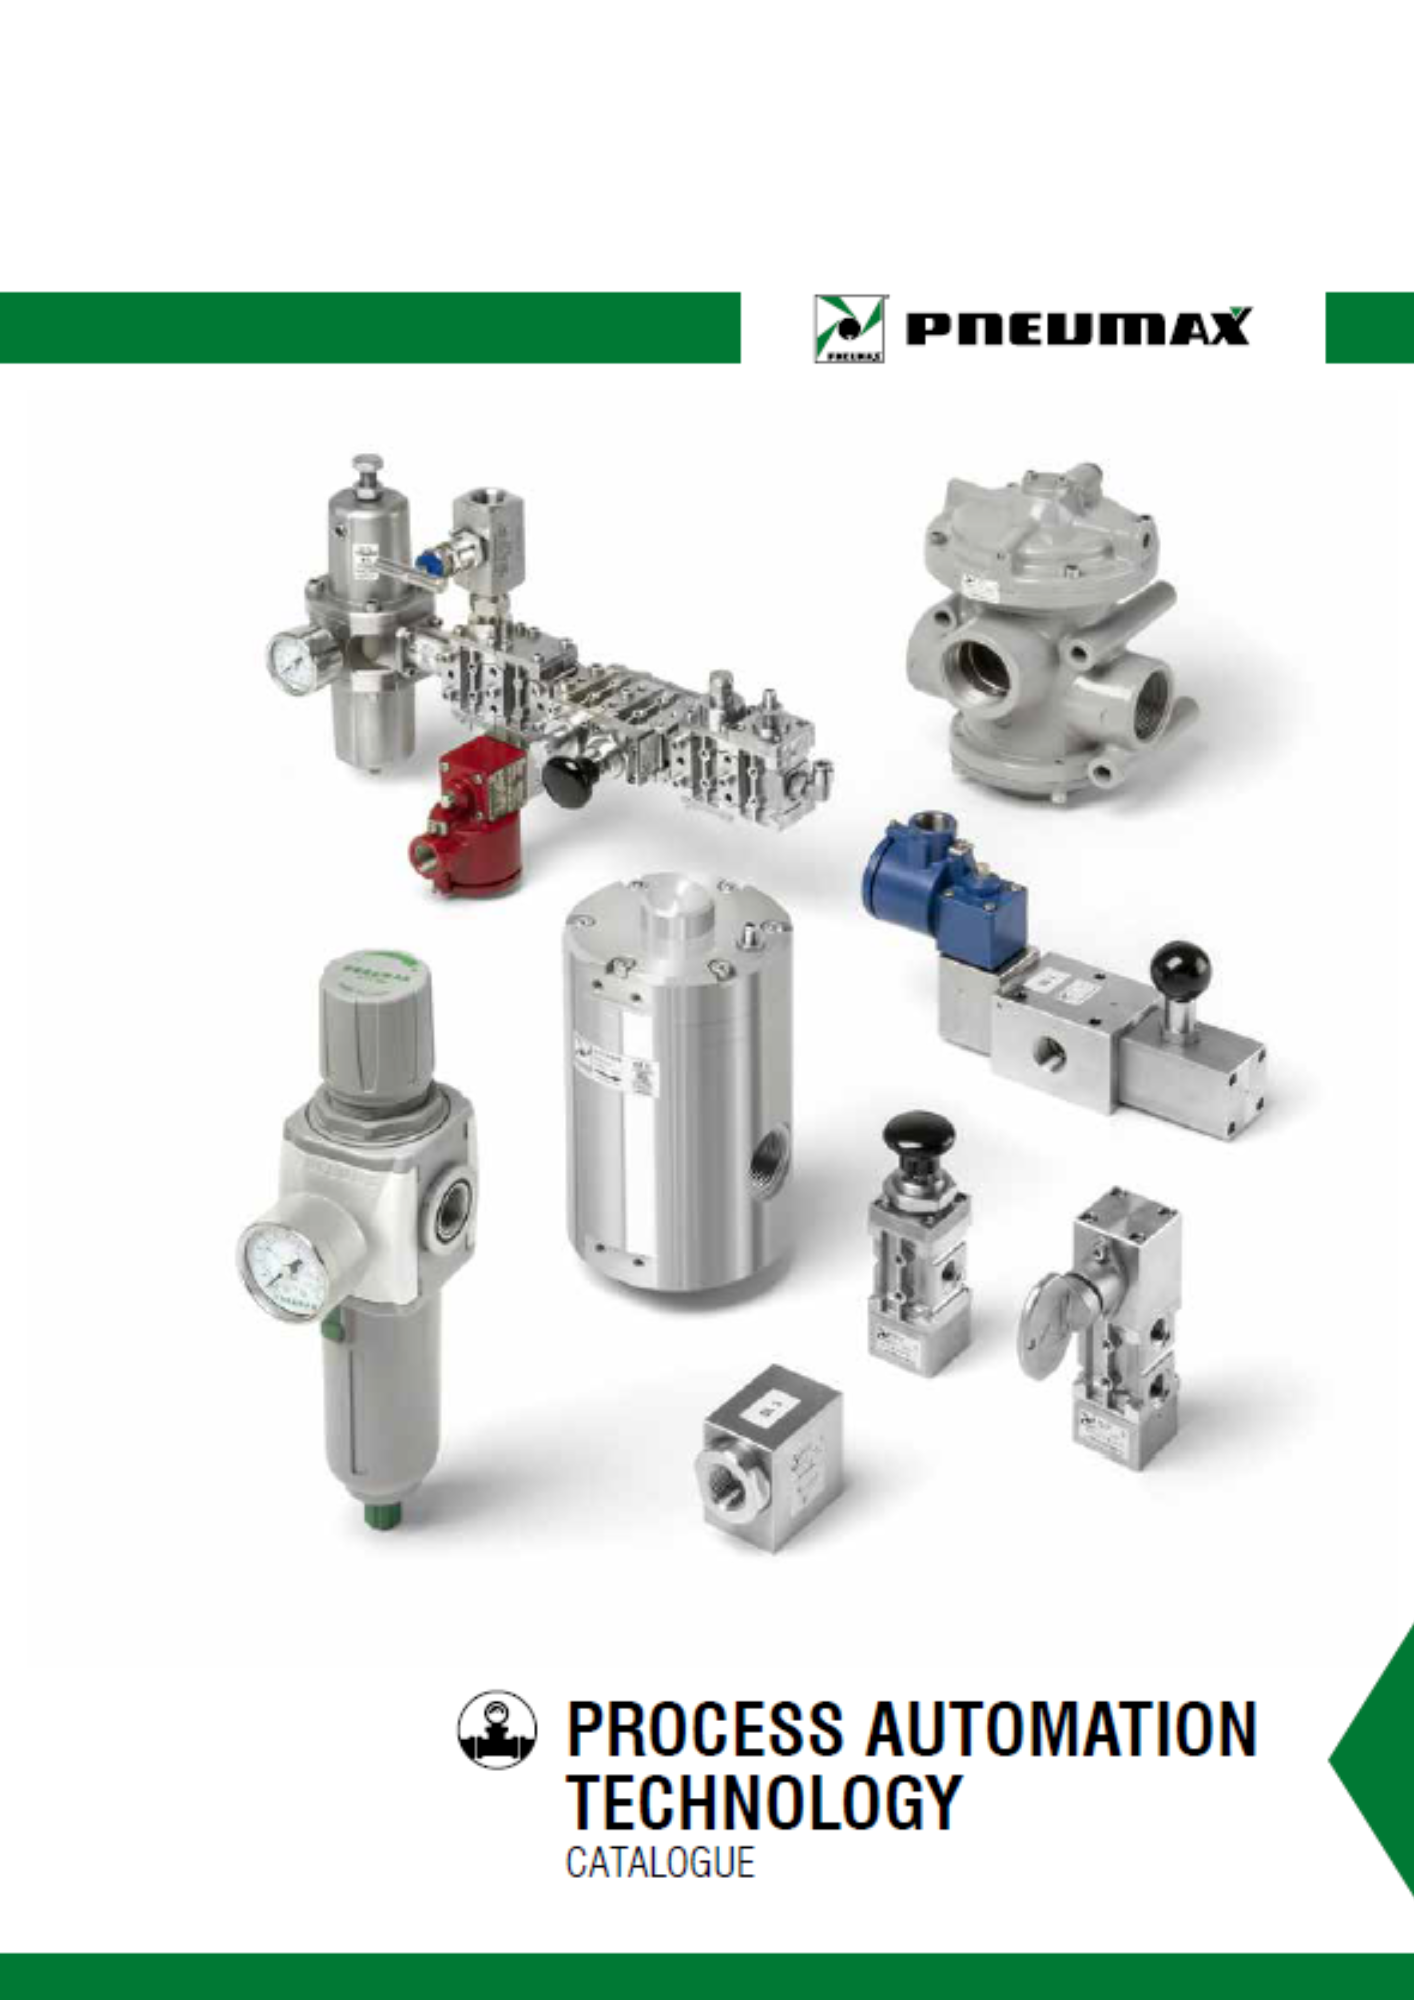 Pneumax: process automation technology